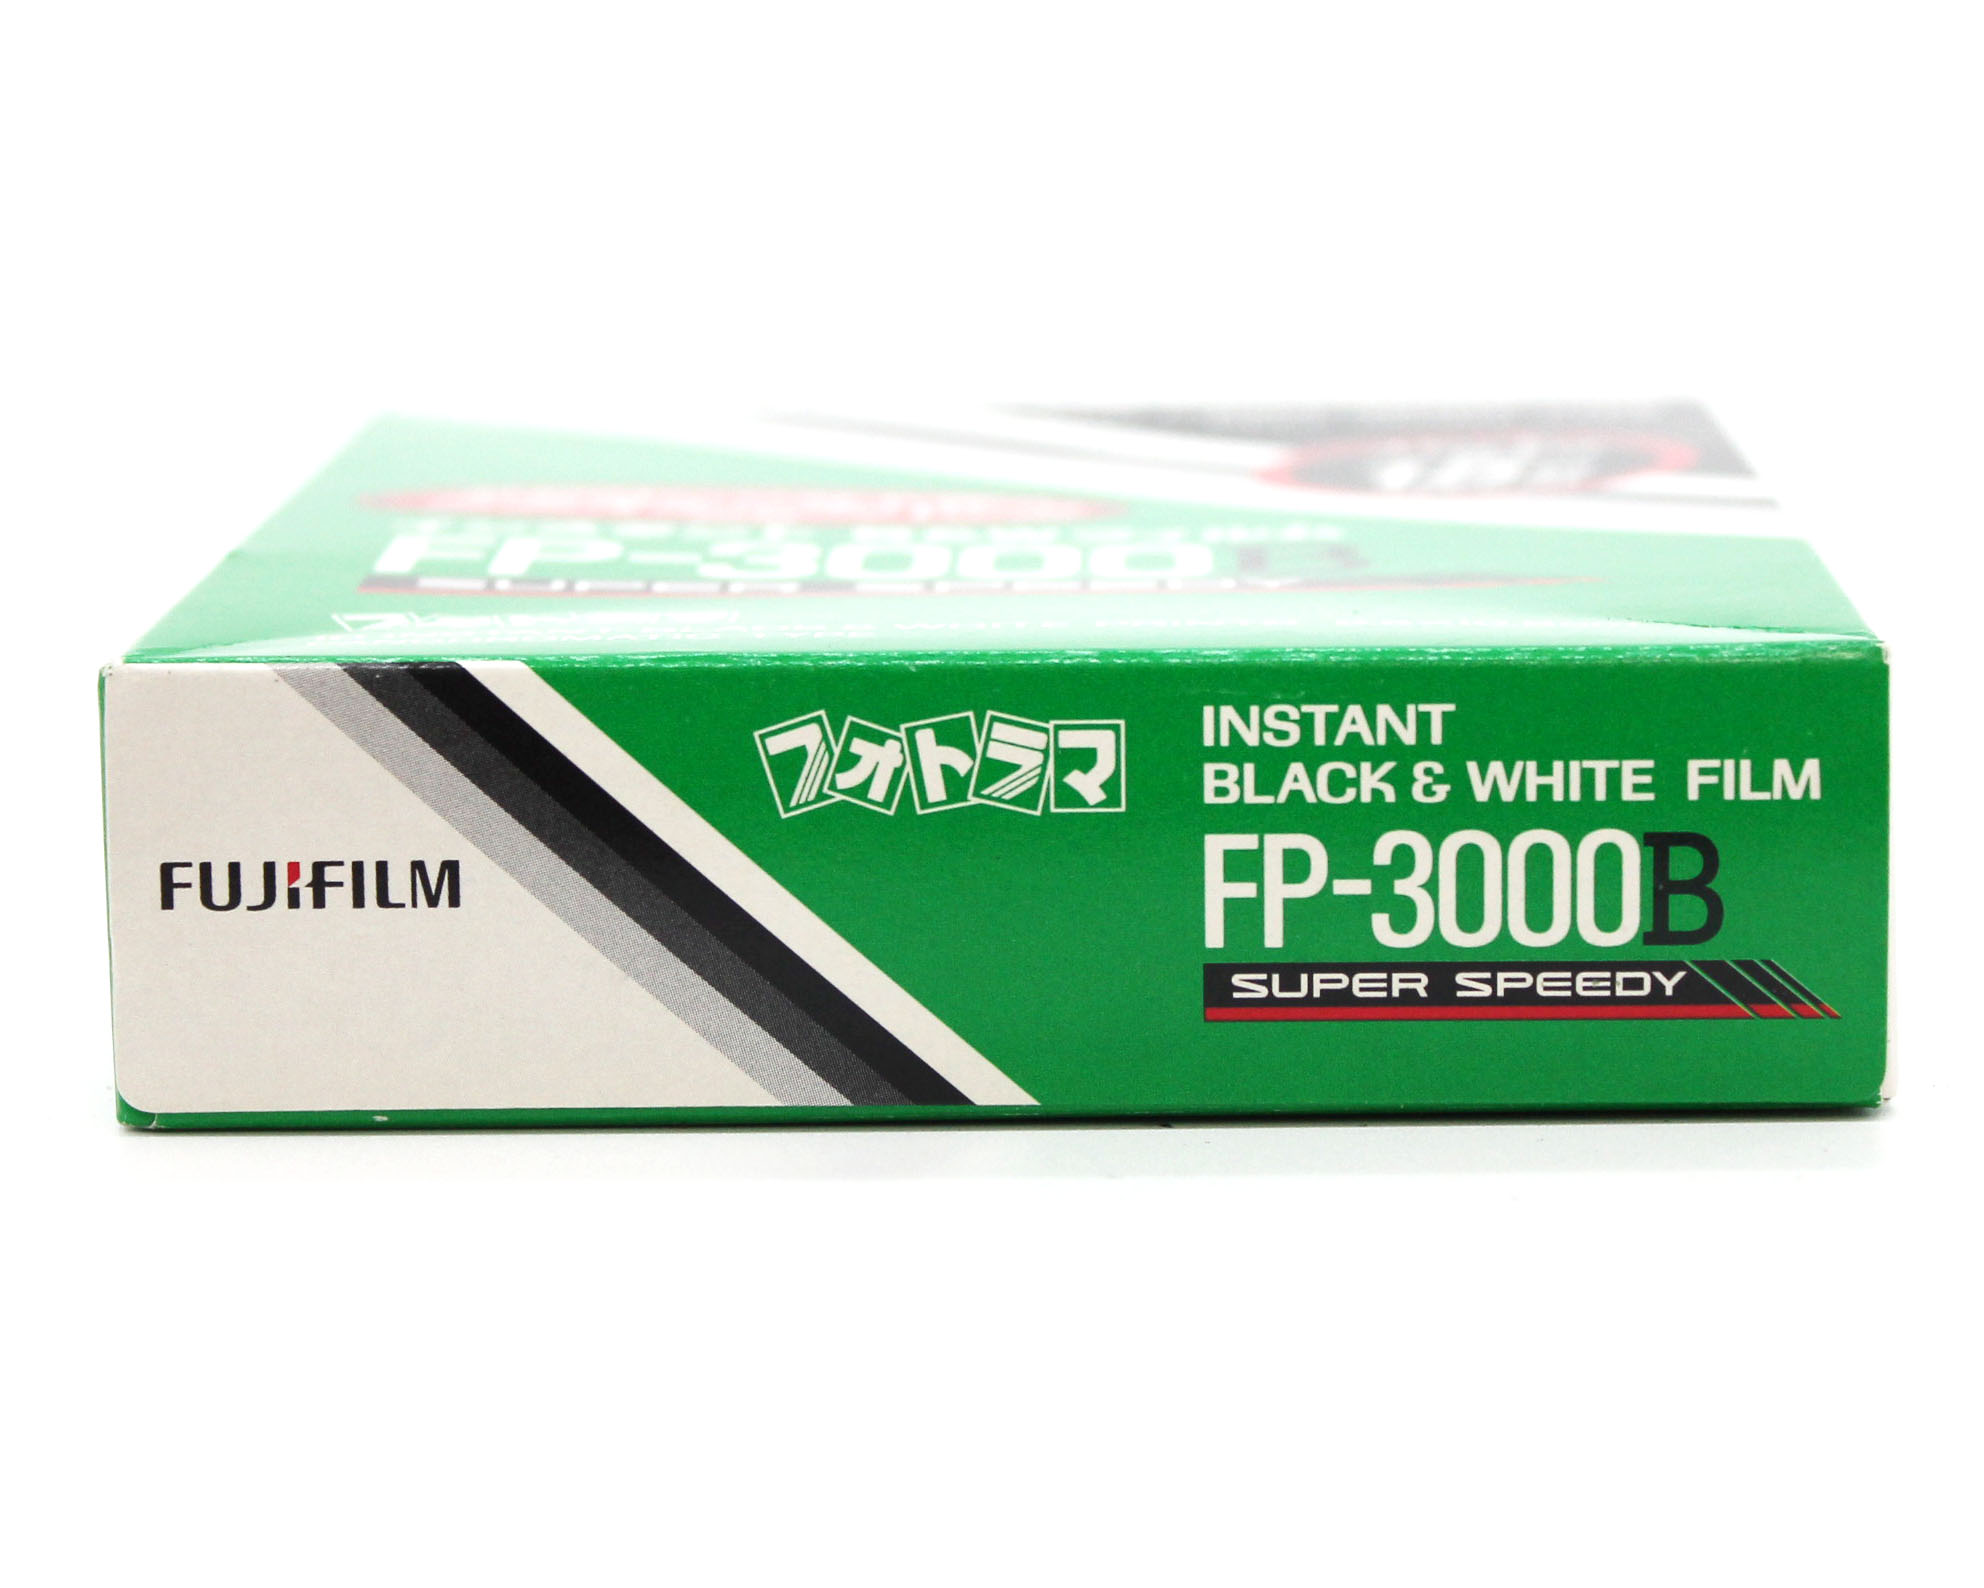  Fuji Fujifilm FP-3000B 8.5x10.8cm Instant Black & White Film (Expired 09/2013) from Japan Photo 5